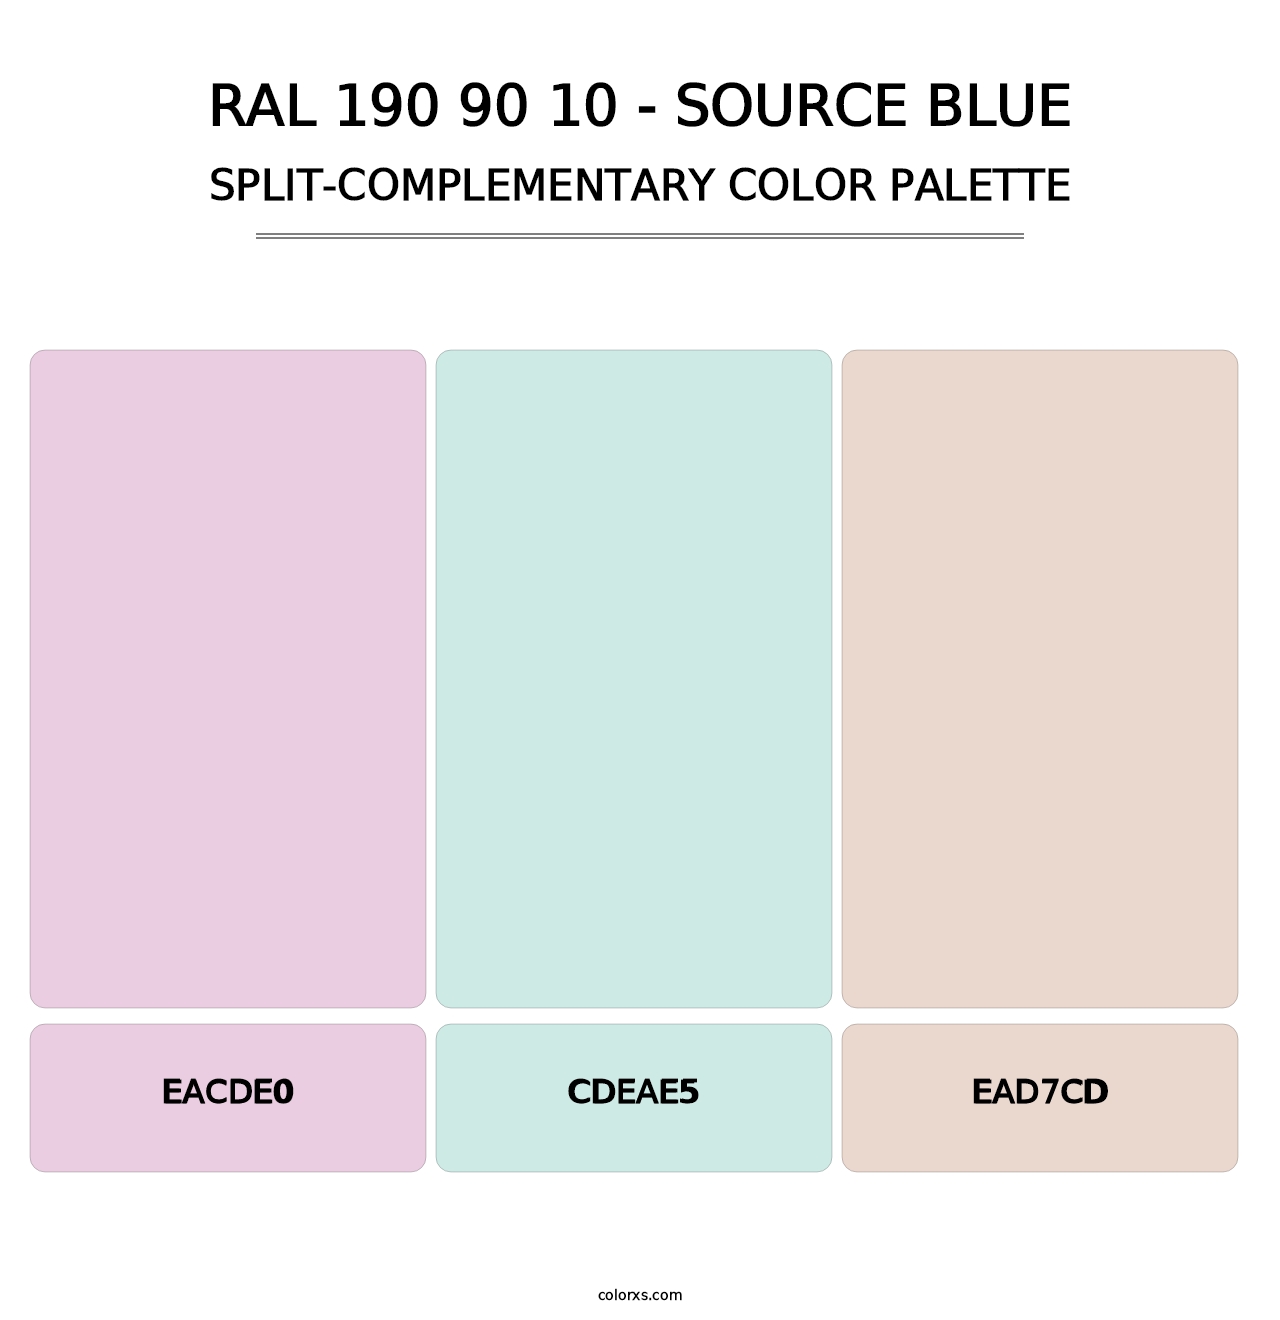 RAL 190 90 10 - Source Blue - Split-Complementary Color Palette